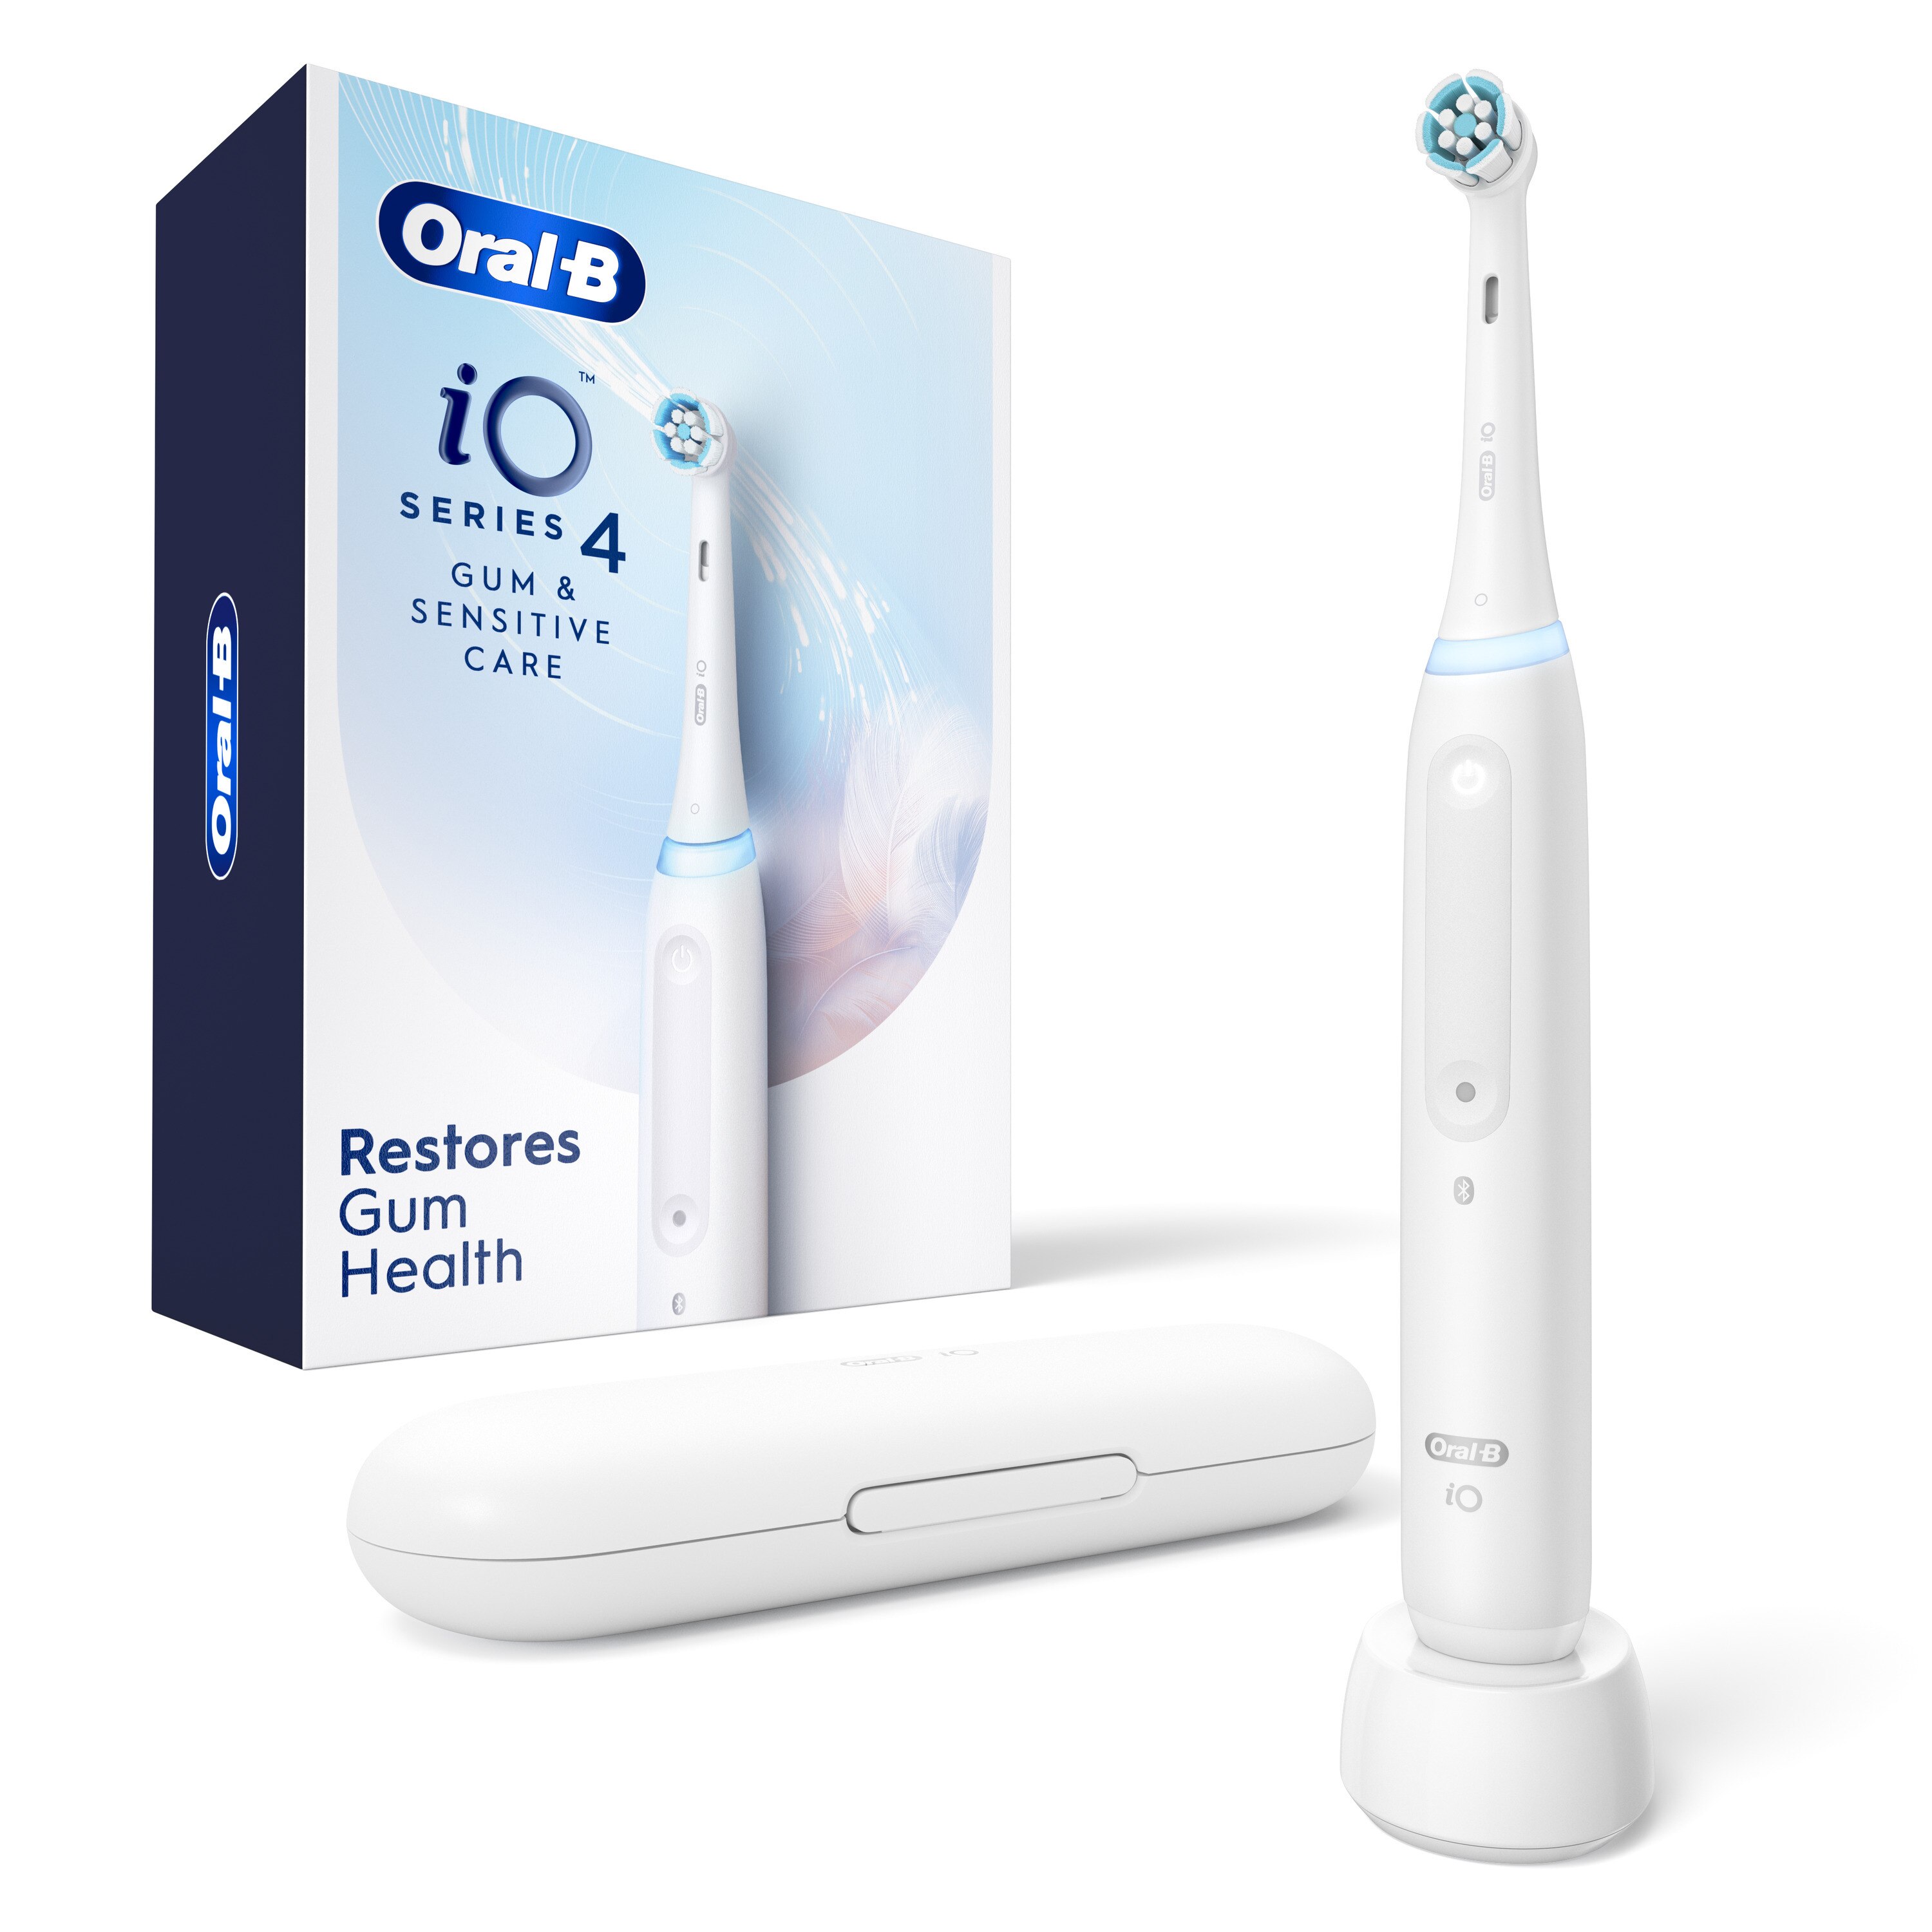 Oral-B IO Series 4 Gum & Sensitive Care Electric Toothbrush, White , CVS